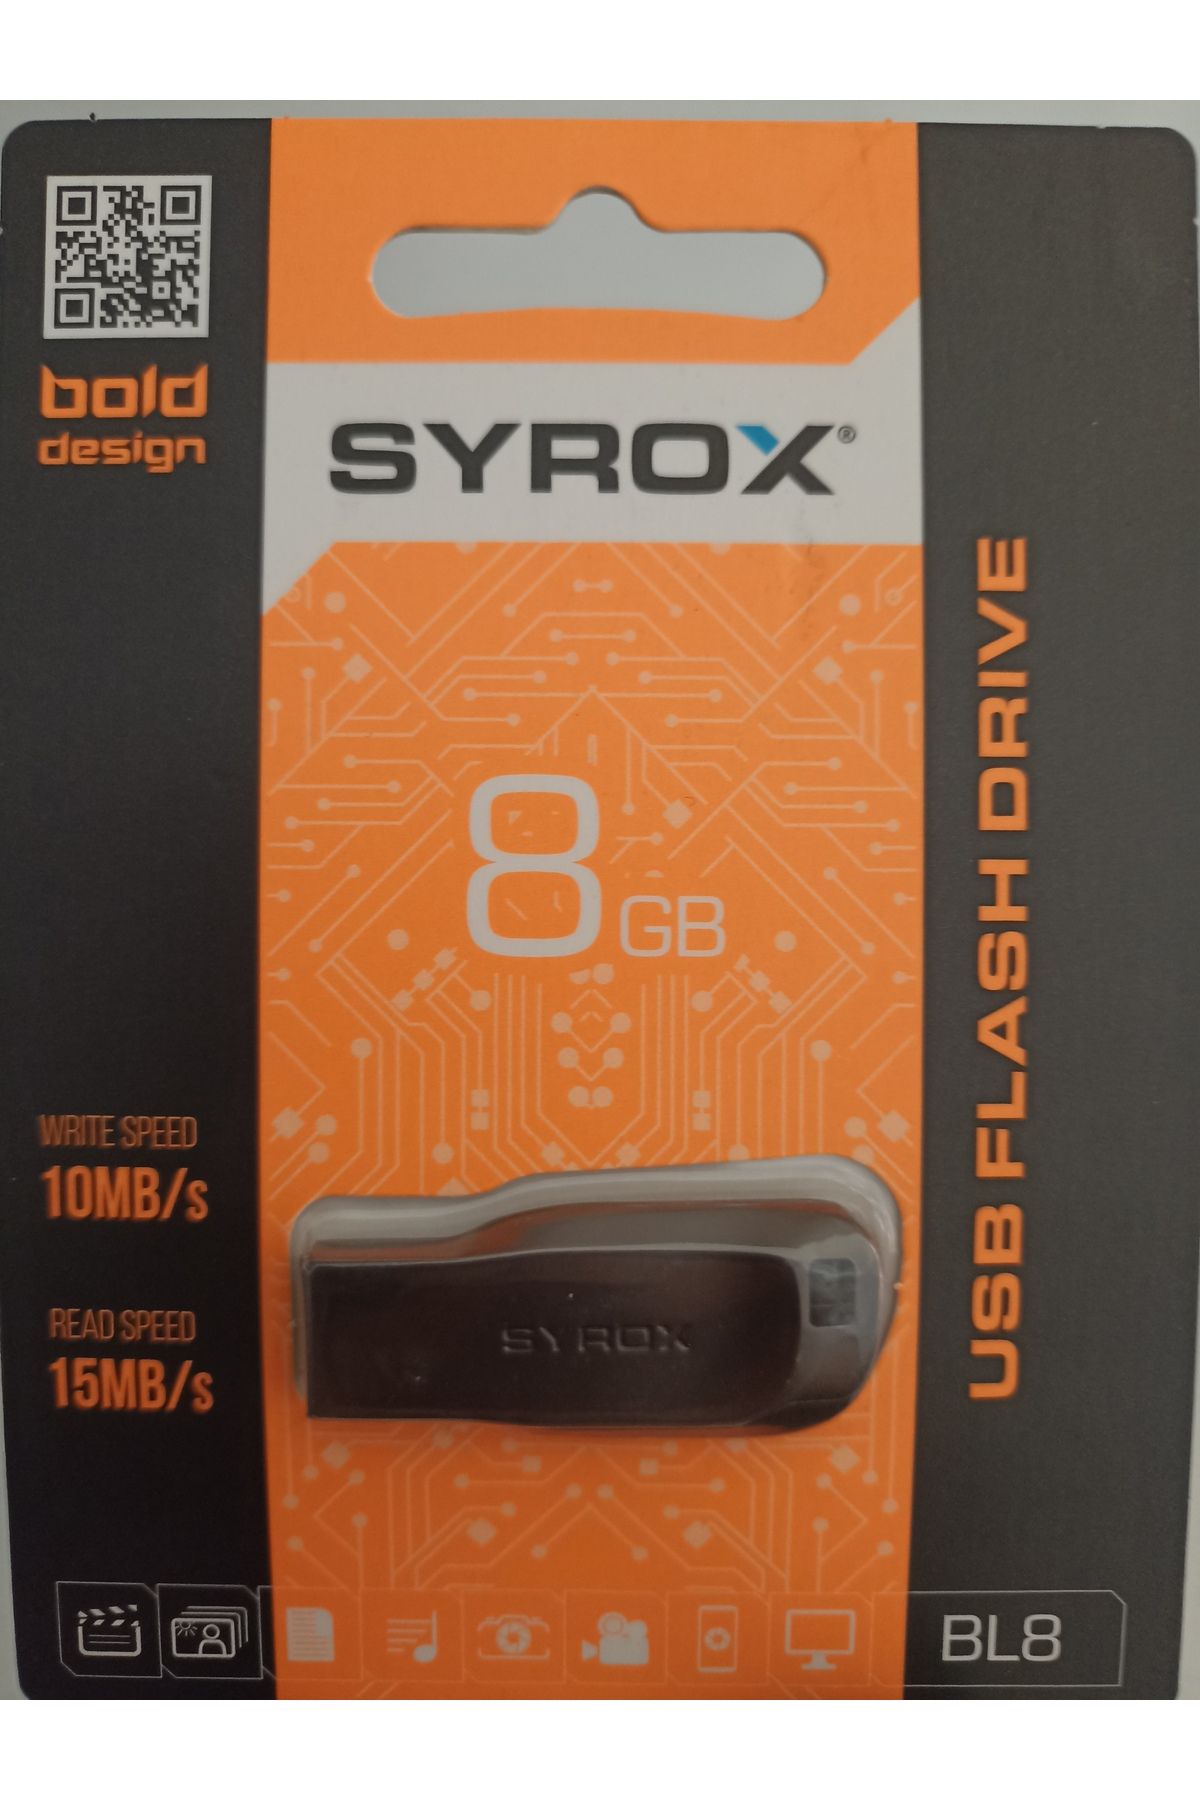 Syrox Flash drive